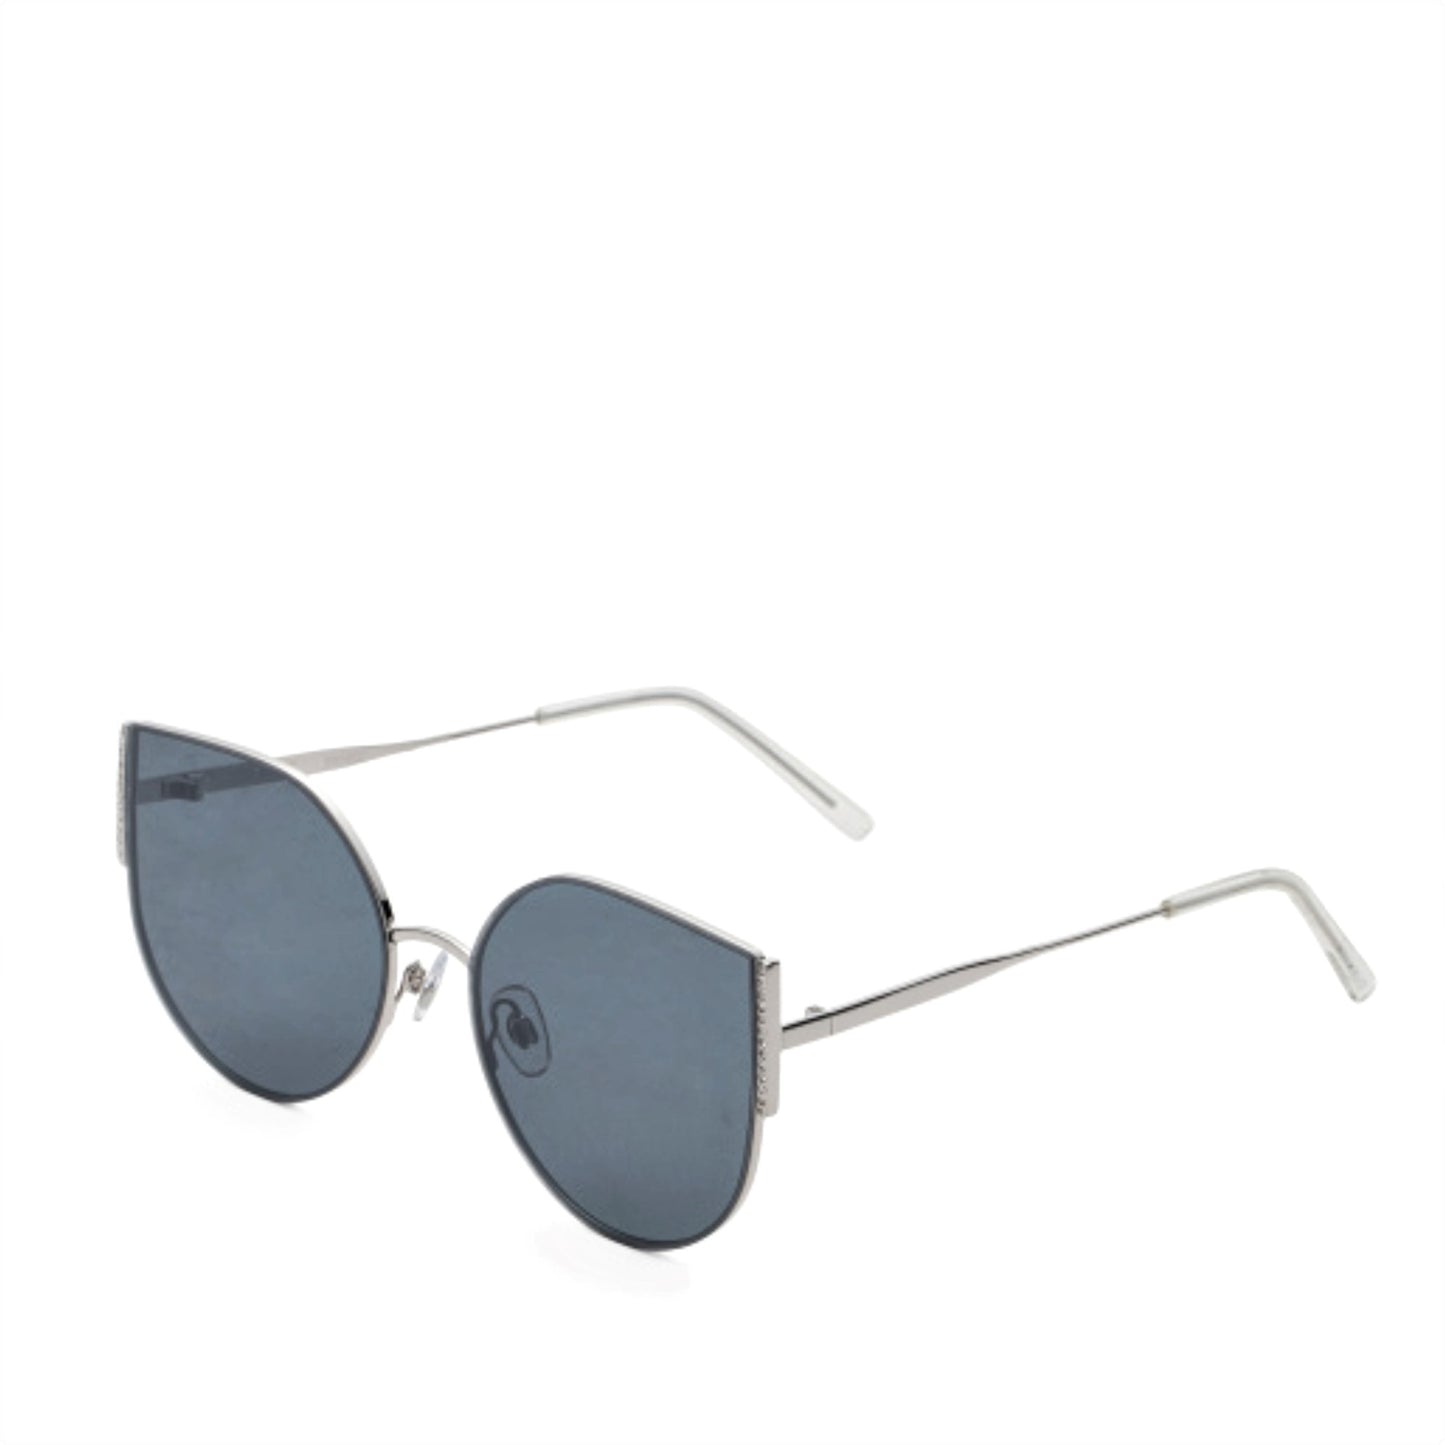 Steve Madden Women's Cat Eye Rhinestone Embellished Sunglasses